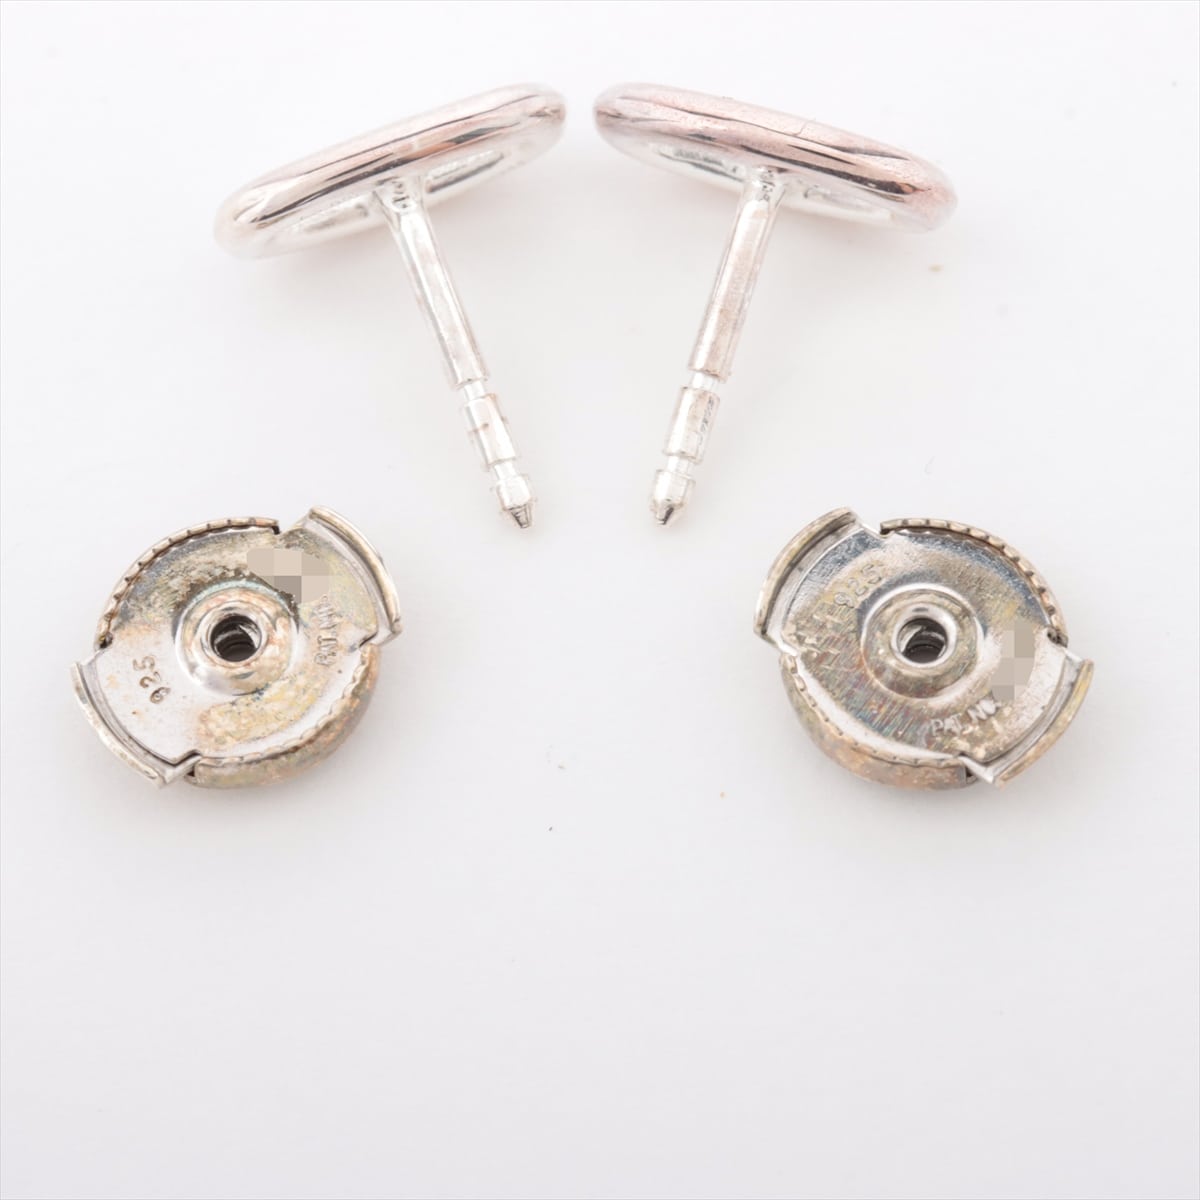 Hermès Chaîne d'Ancre Piercing jewelry (for both ears) 925 1.8g Silver